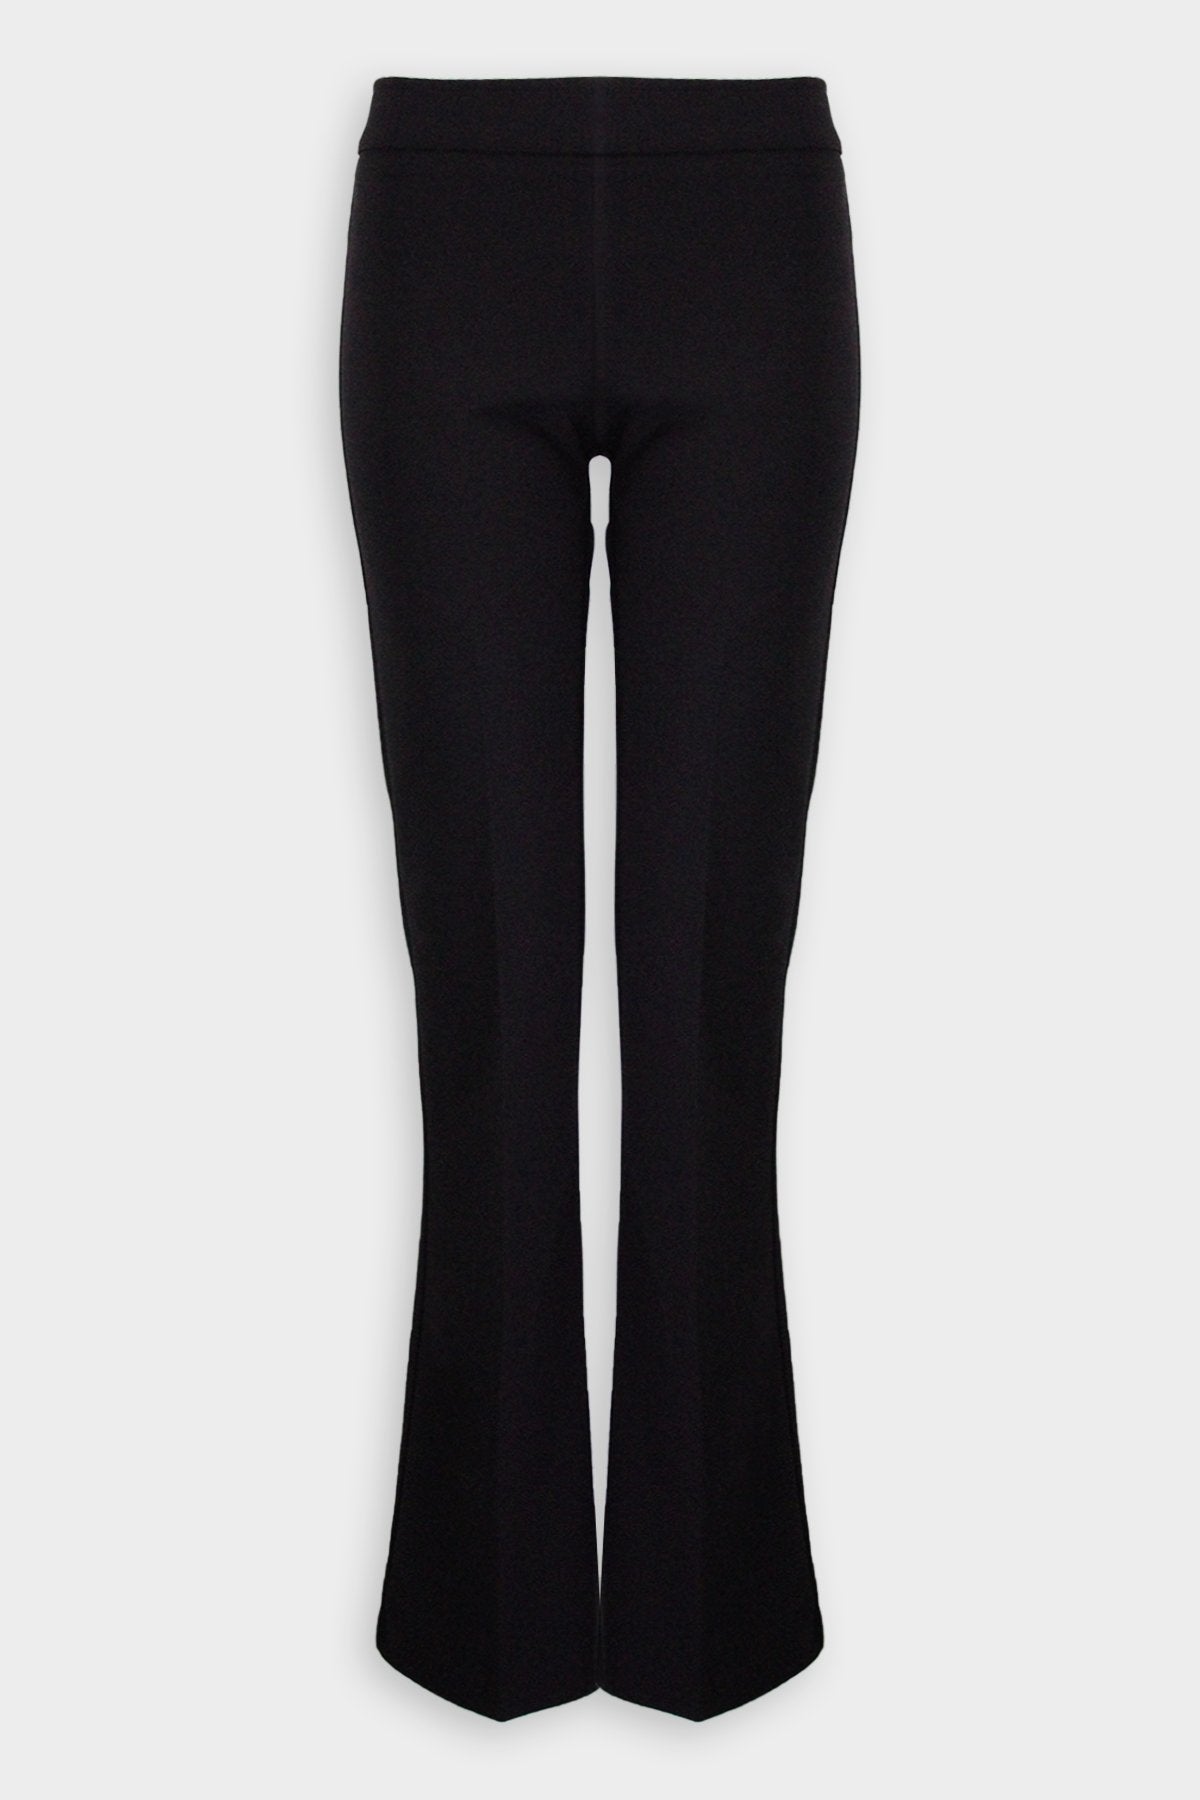 Bellini Double Crepe Pant in Black - shop-olivia.com